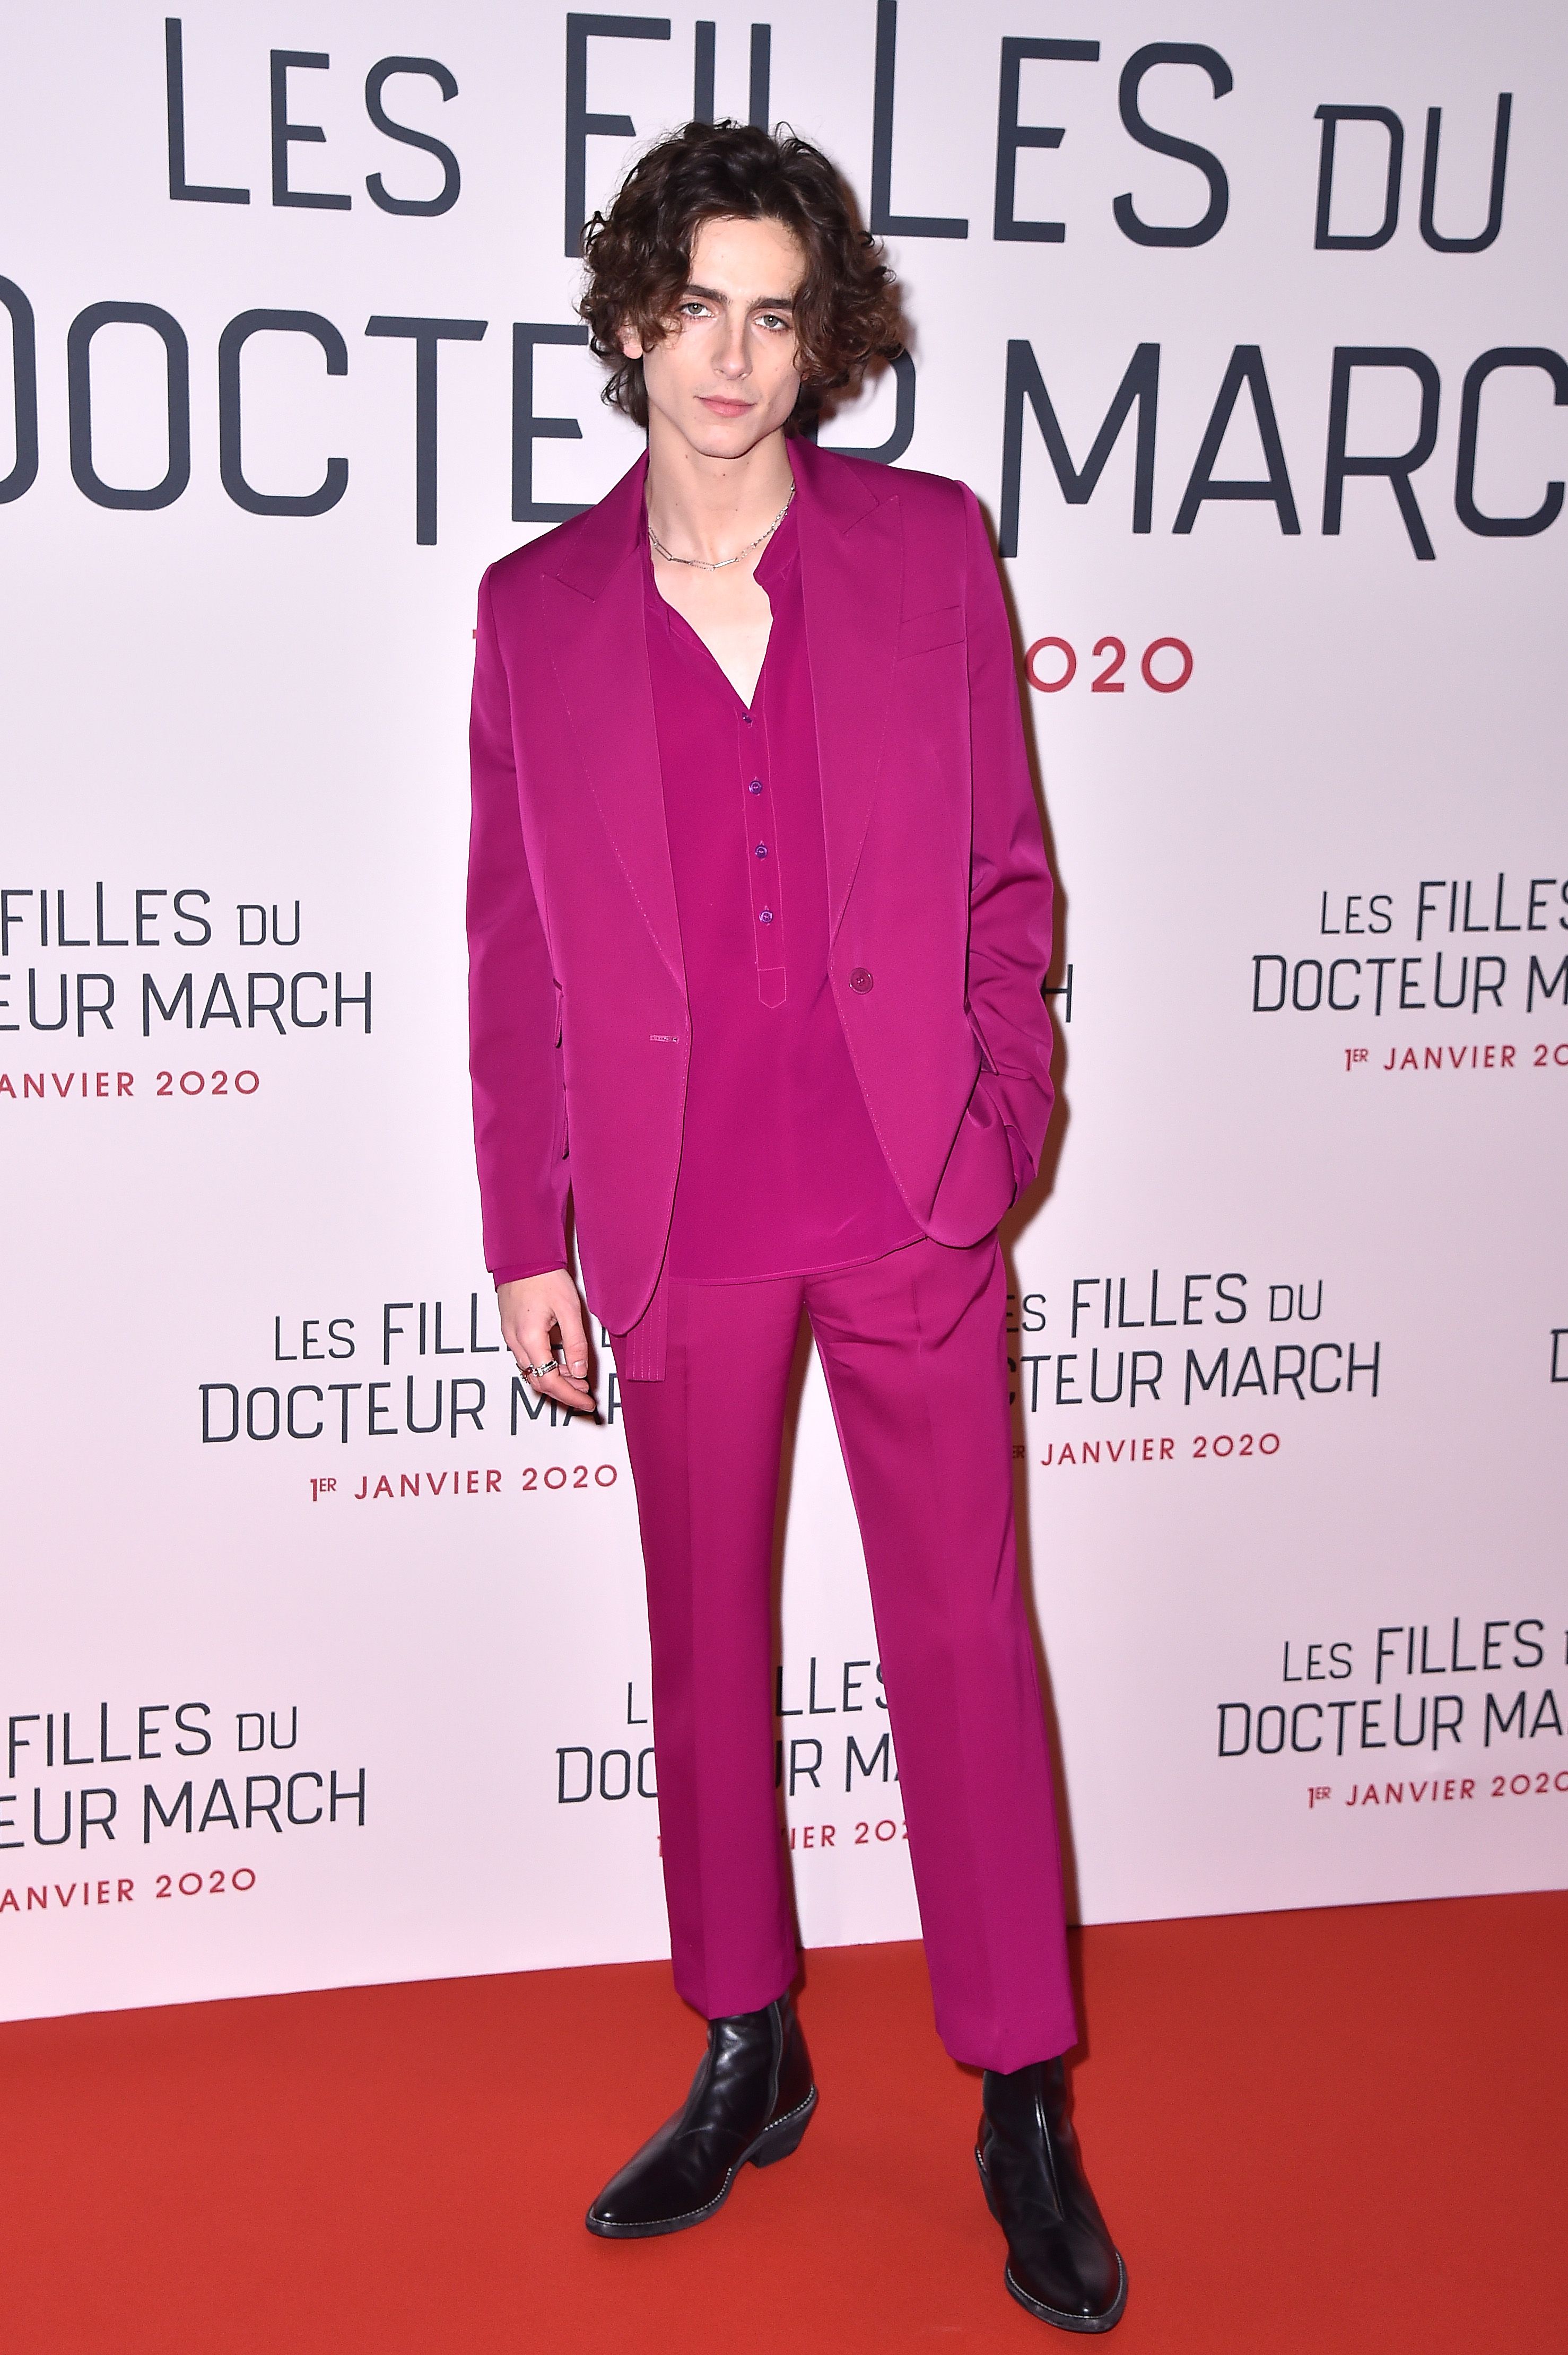 Timothée Chalamet Wore a Pink Suit to the Little Women Premiere